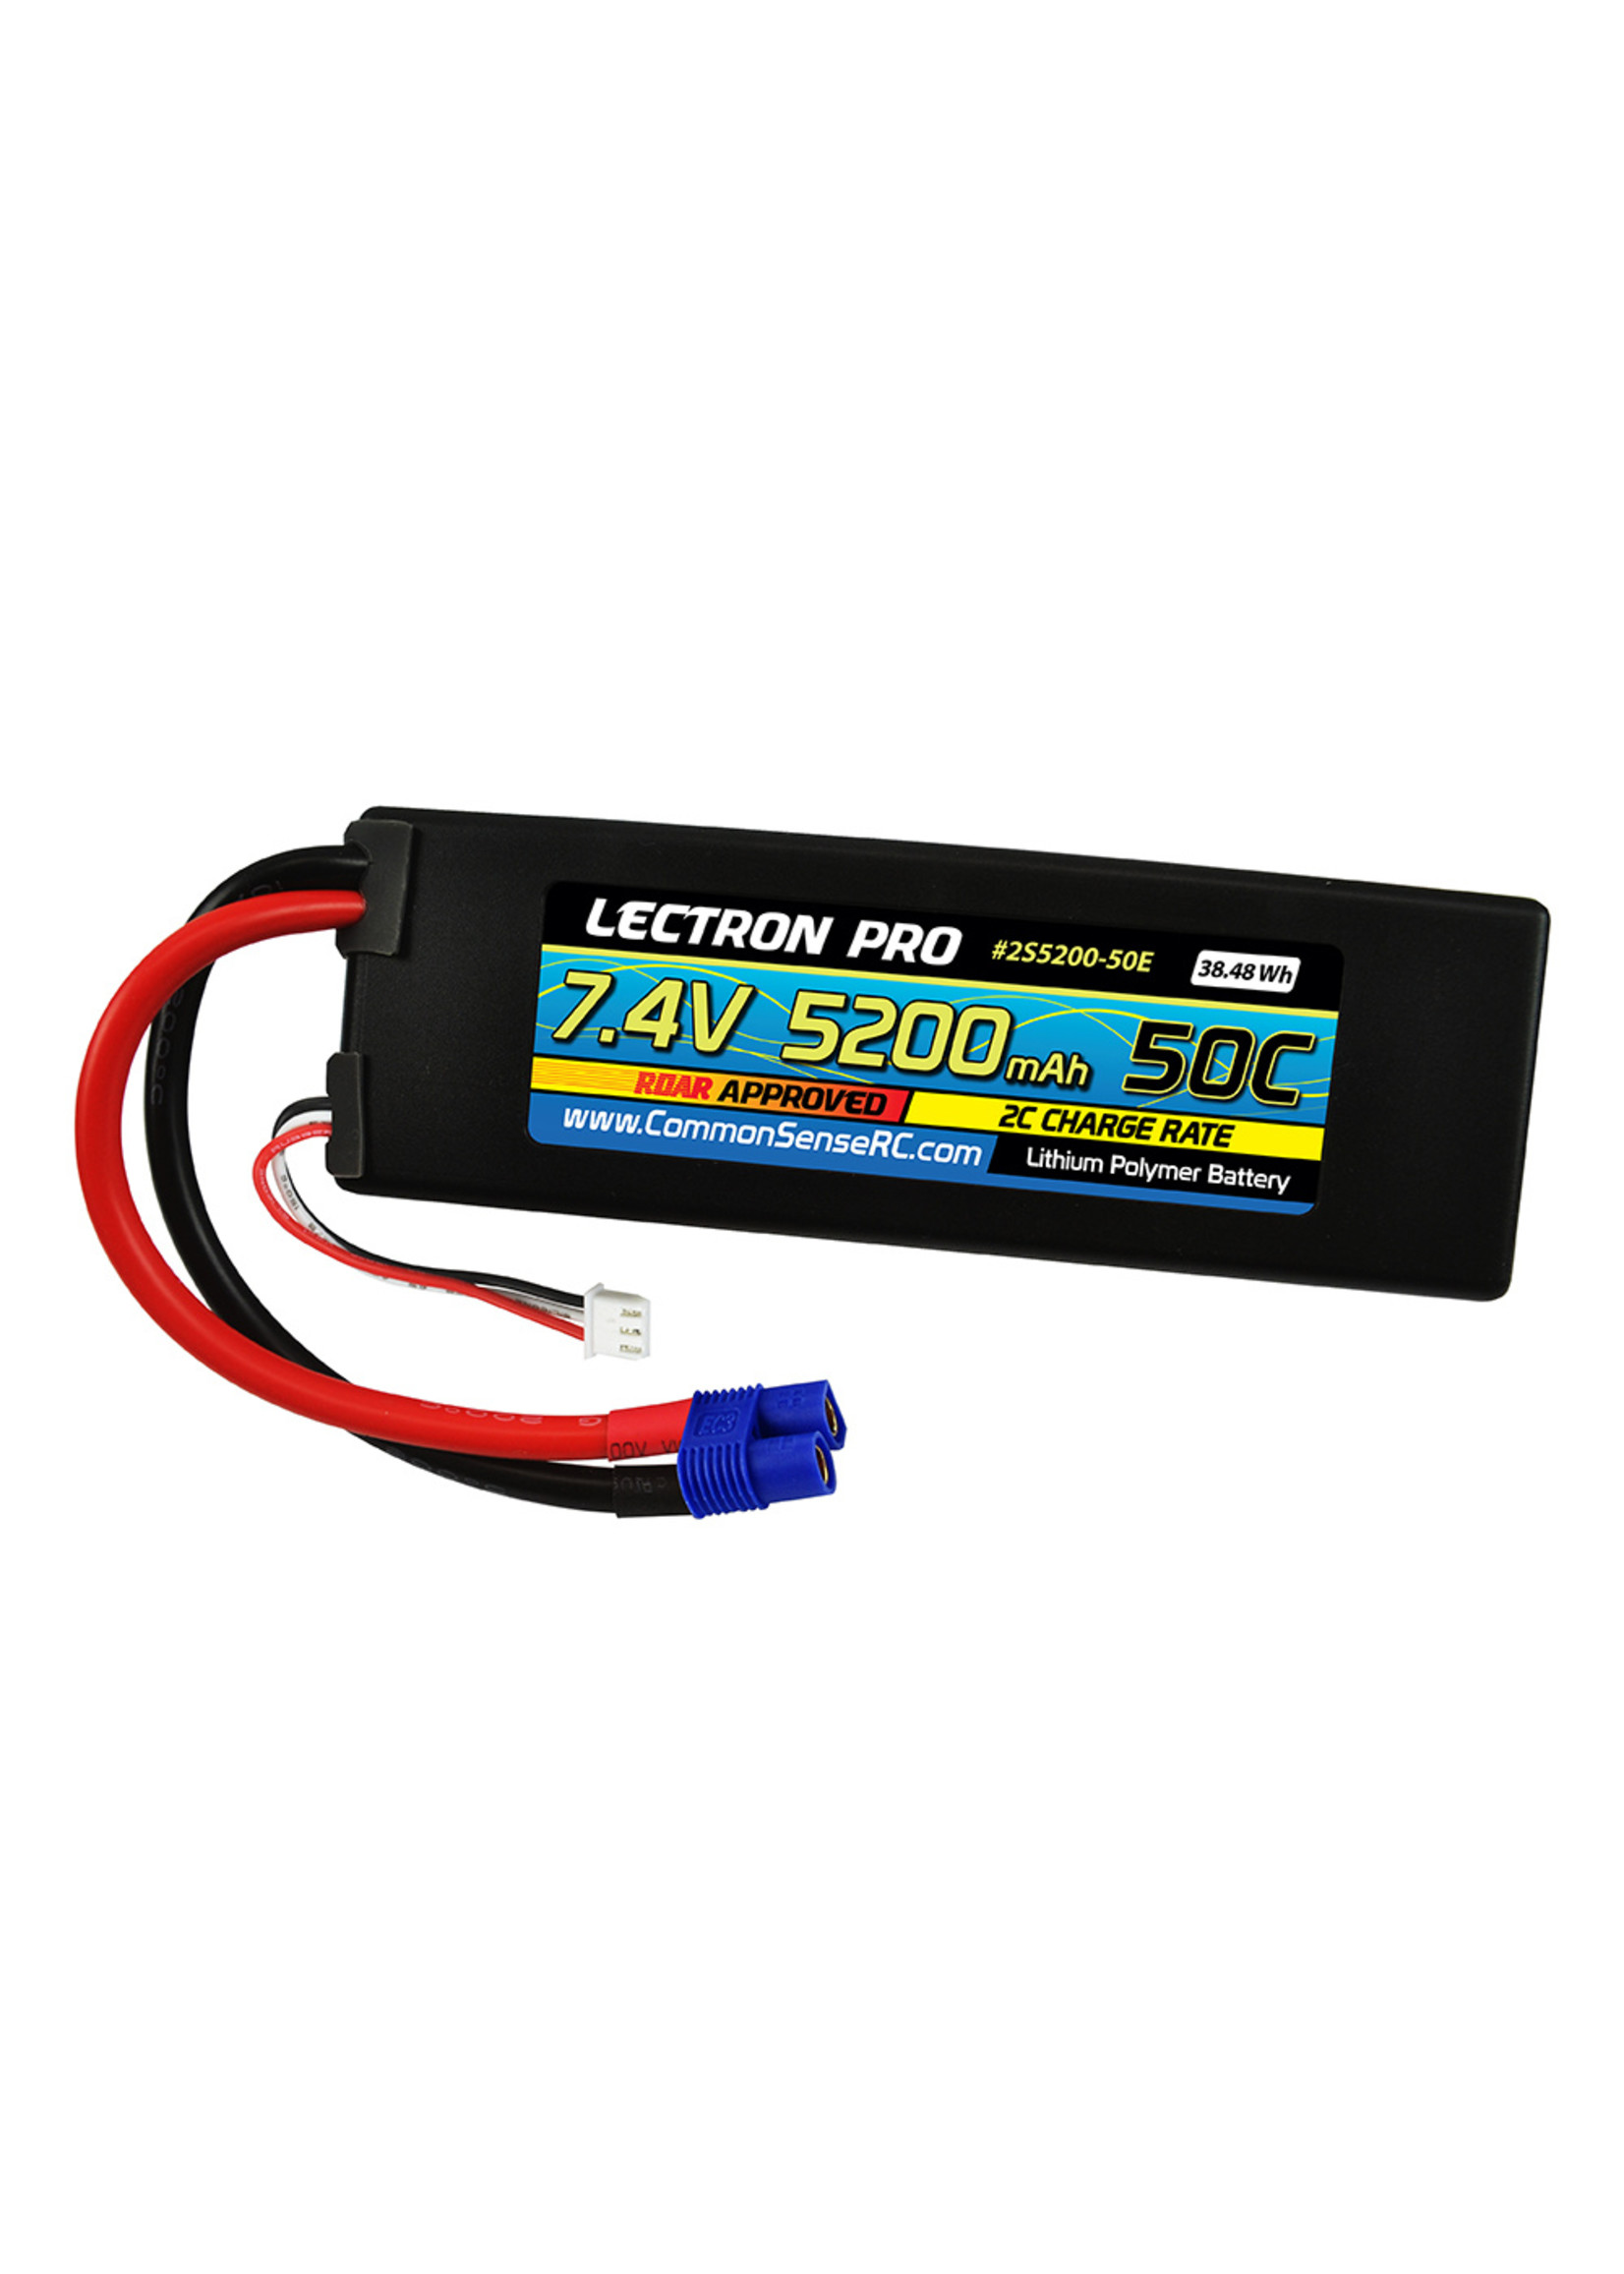 Common Sense RC 2S5200-50E - 7.4V 5200mAh 50C Lipo Battery with EC3 Connector